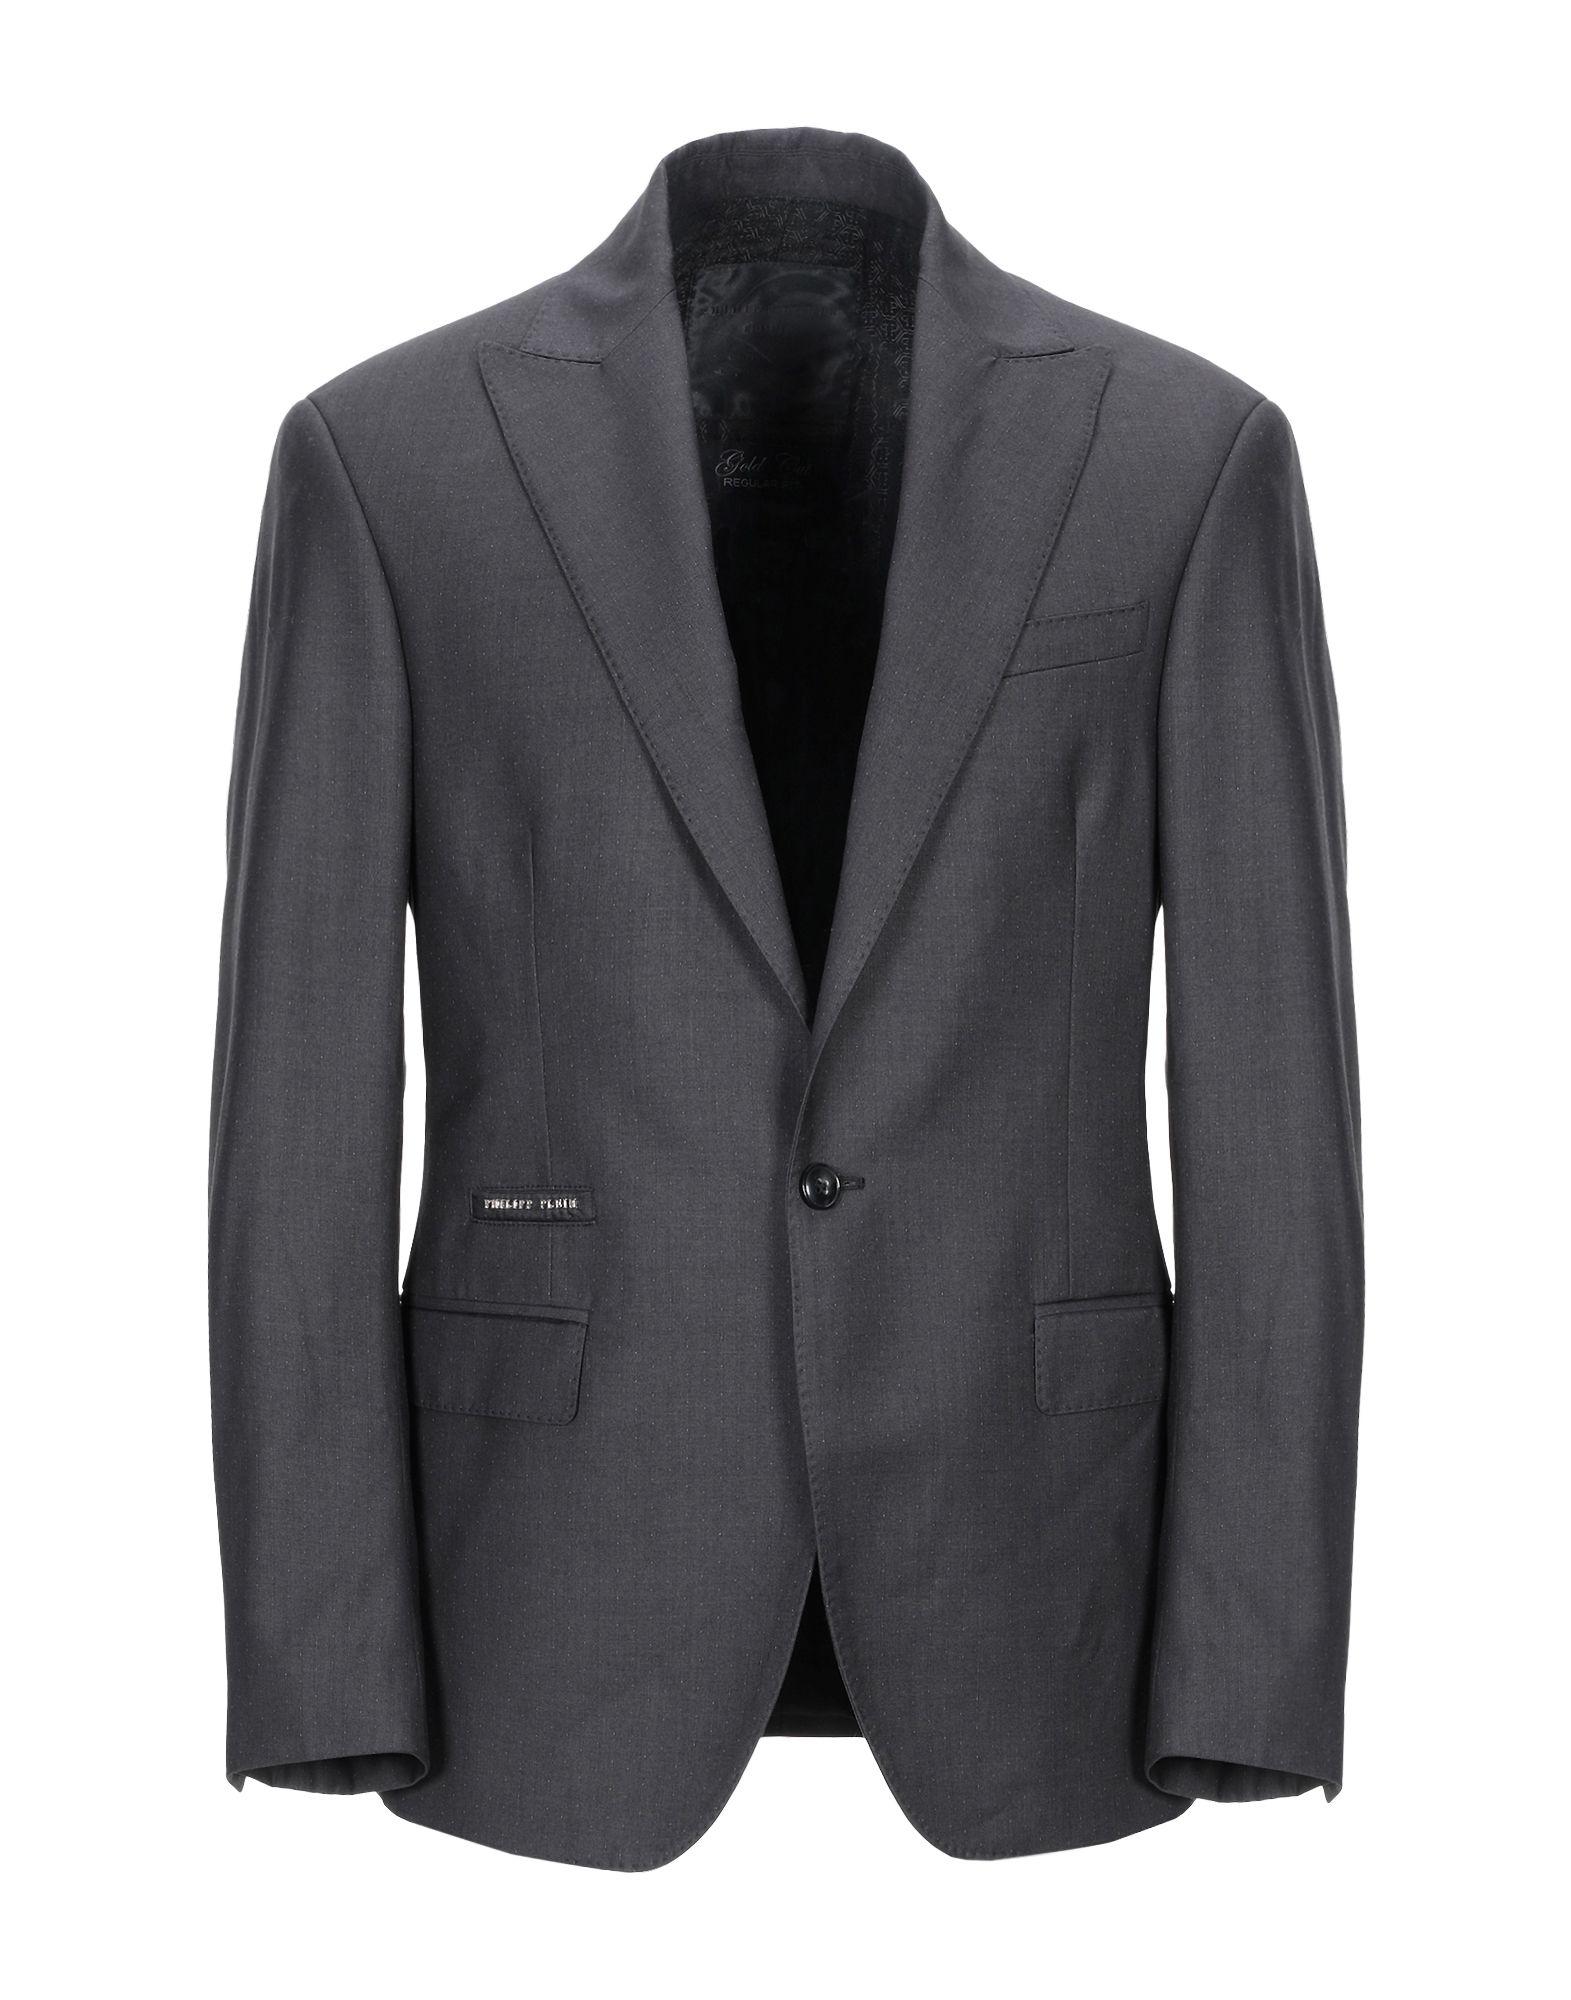 Philipp Plein Synthetic Blazer in Steel Grey (Gray) for Men - Lyst